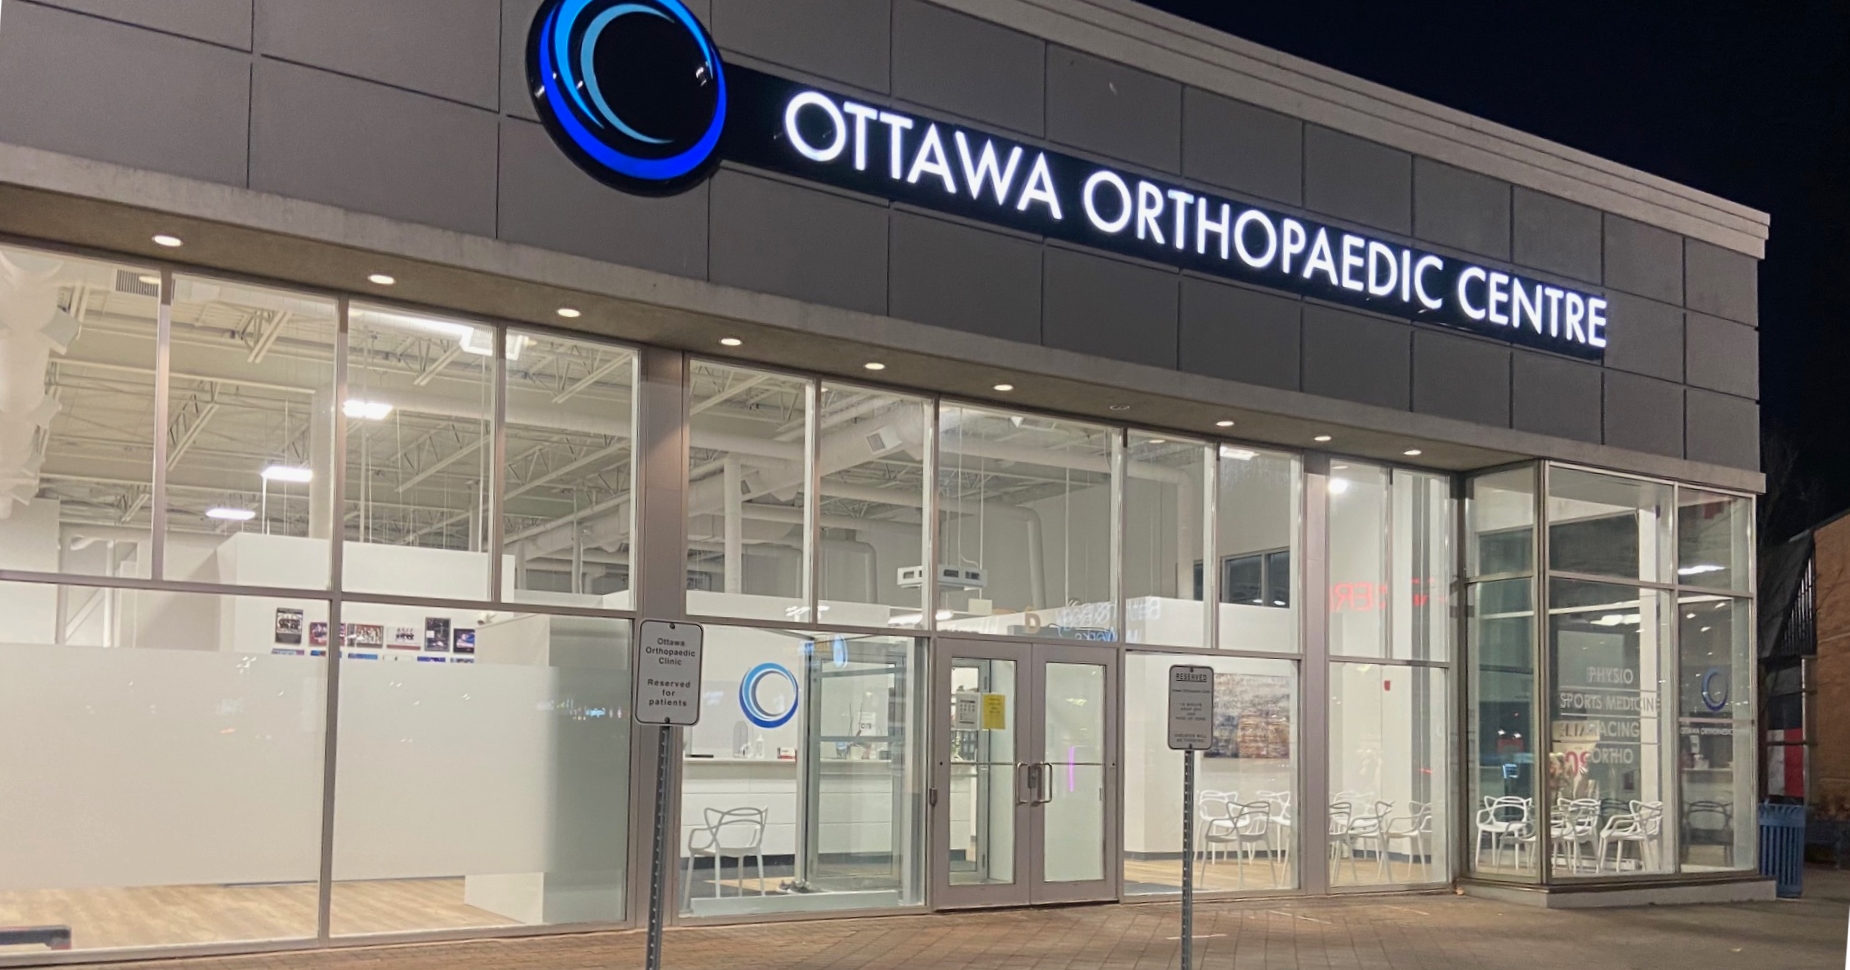 Ottawa Orthopaedic Centre - Exterior